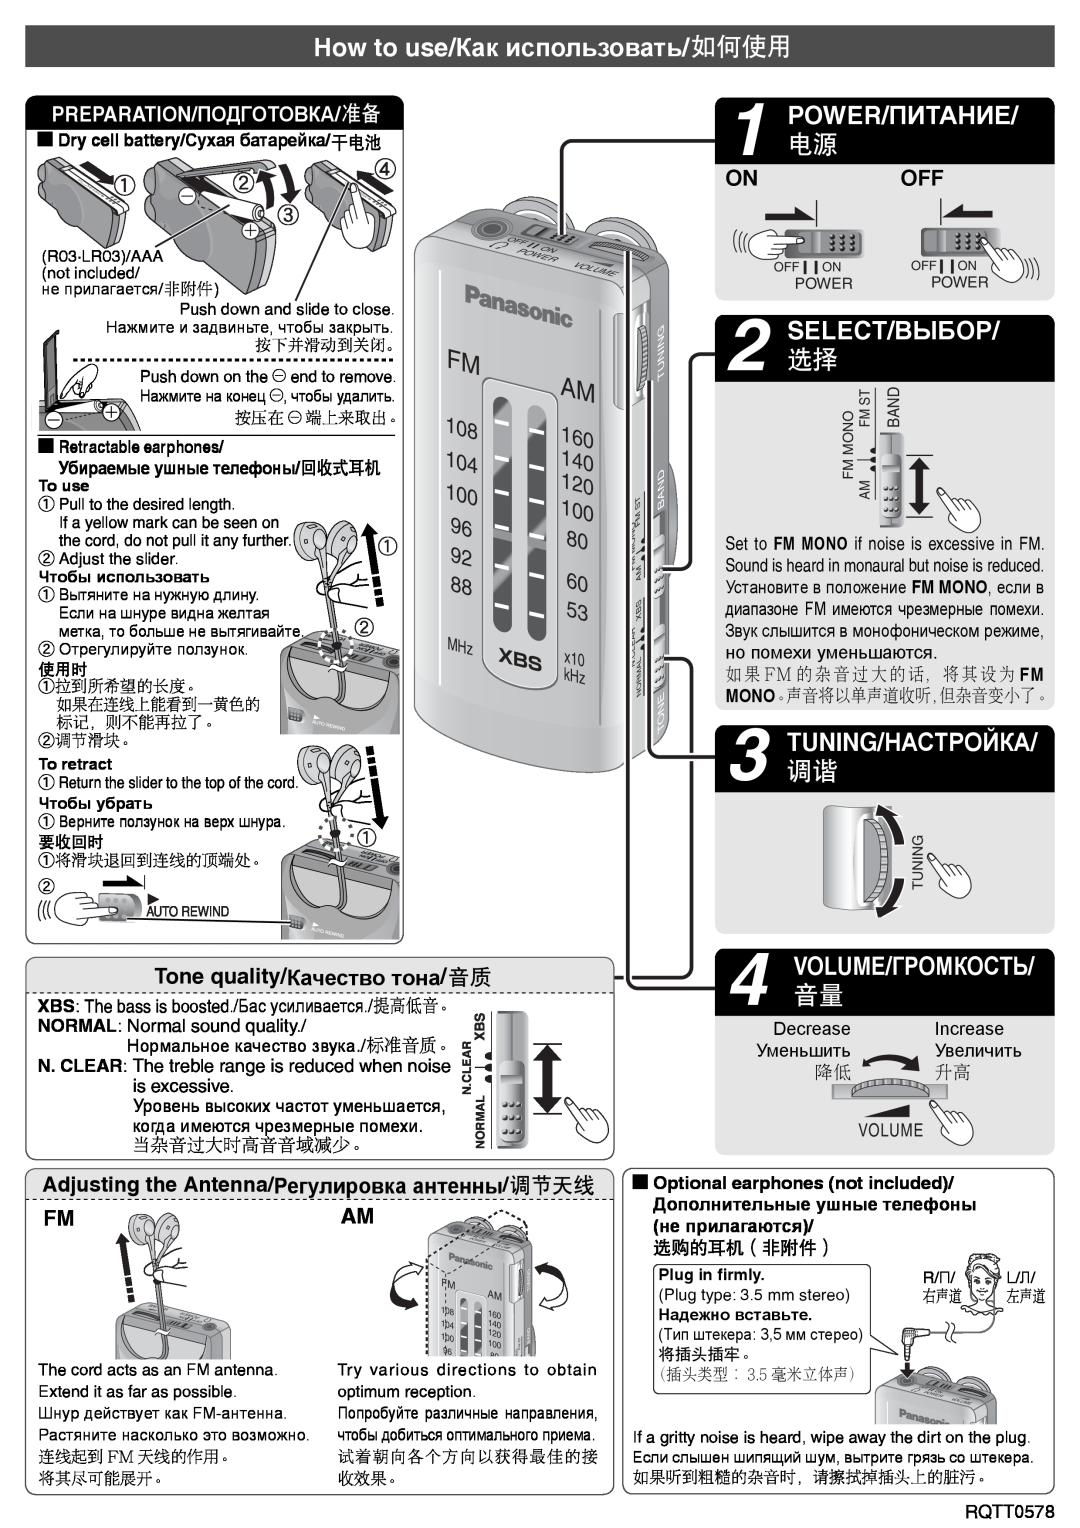 Panasonic RF-NA06R Onoff, Tone quality/Качество тона, Adjusting the Antenna/Регулировка антенны, Power/Питание, Tuning 